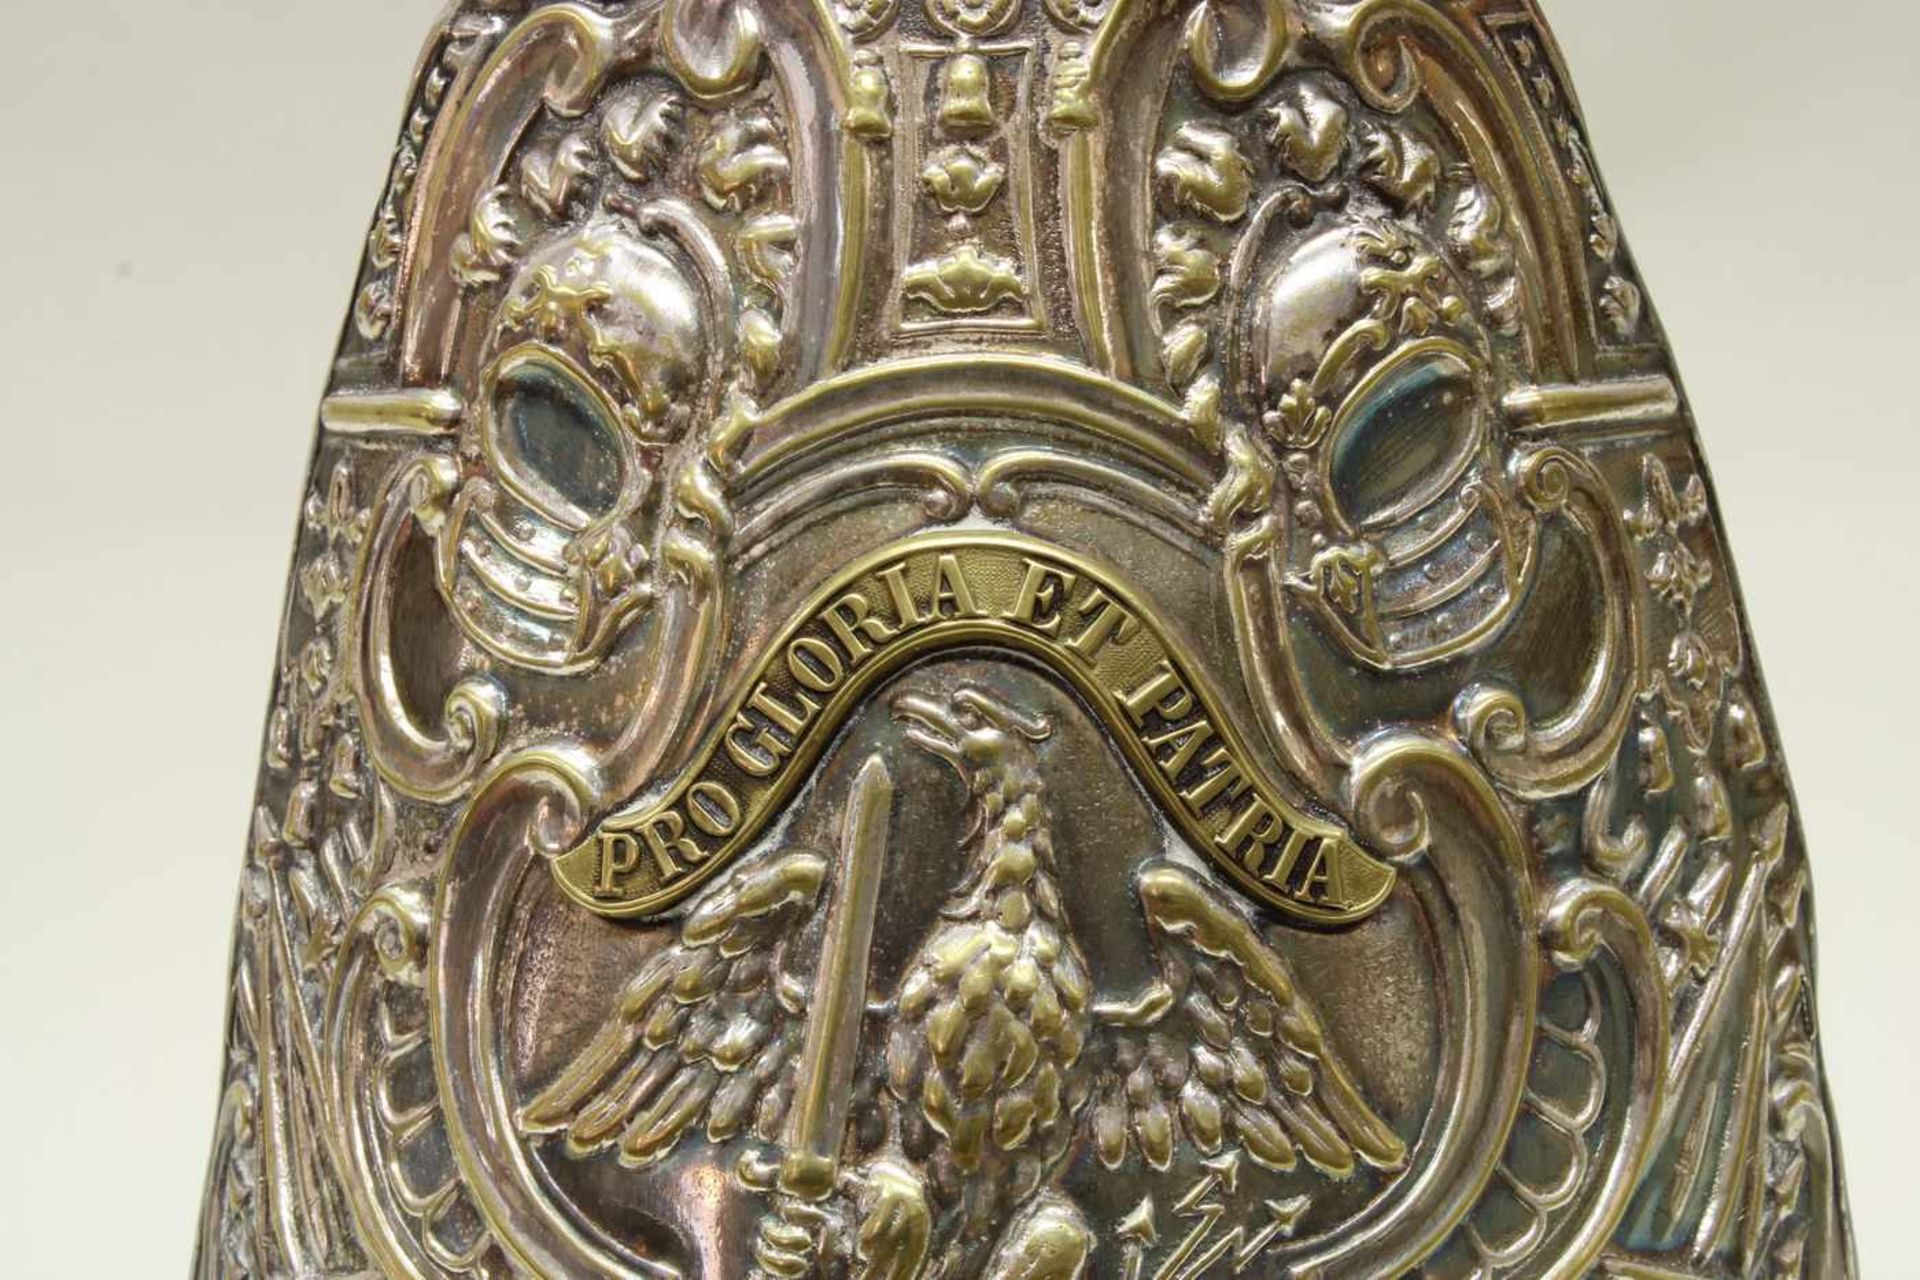 Füsiliermütze, Preussen, Ende 19. Jh., reliefiertes Mützenblech "Pro gloria et patria", mit Adler - Bild 2 aus 6